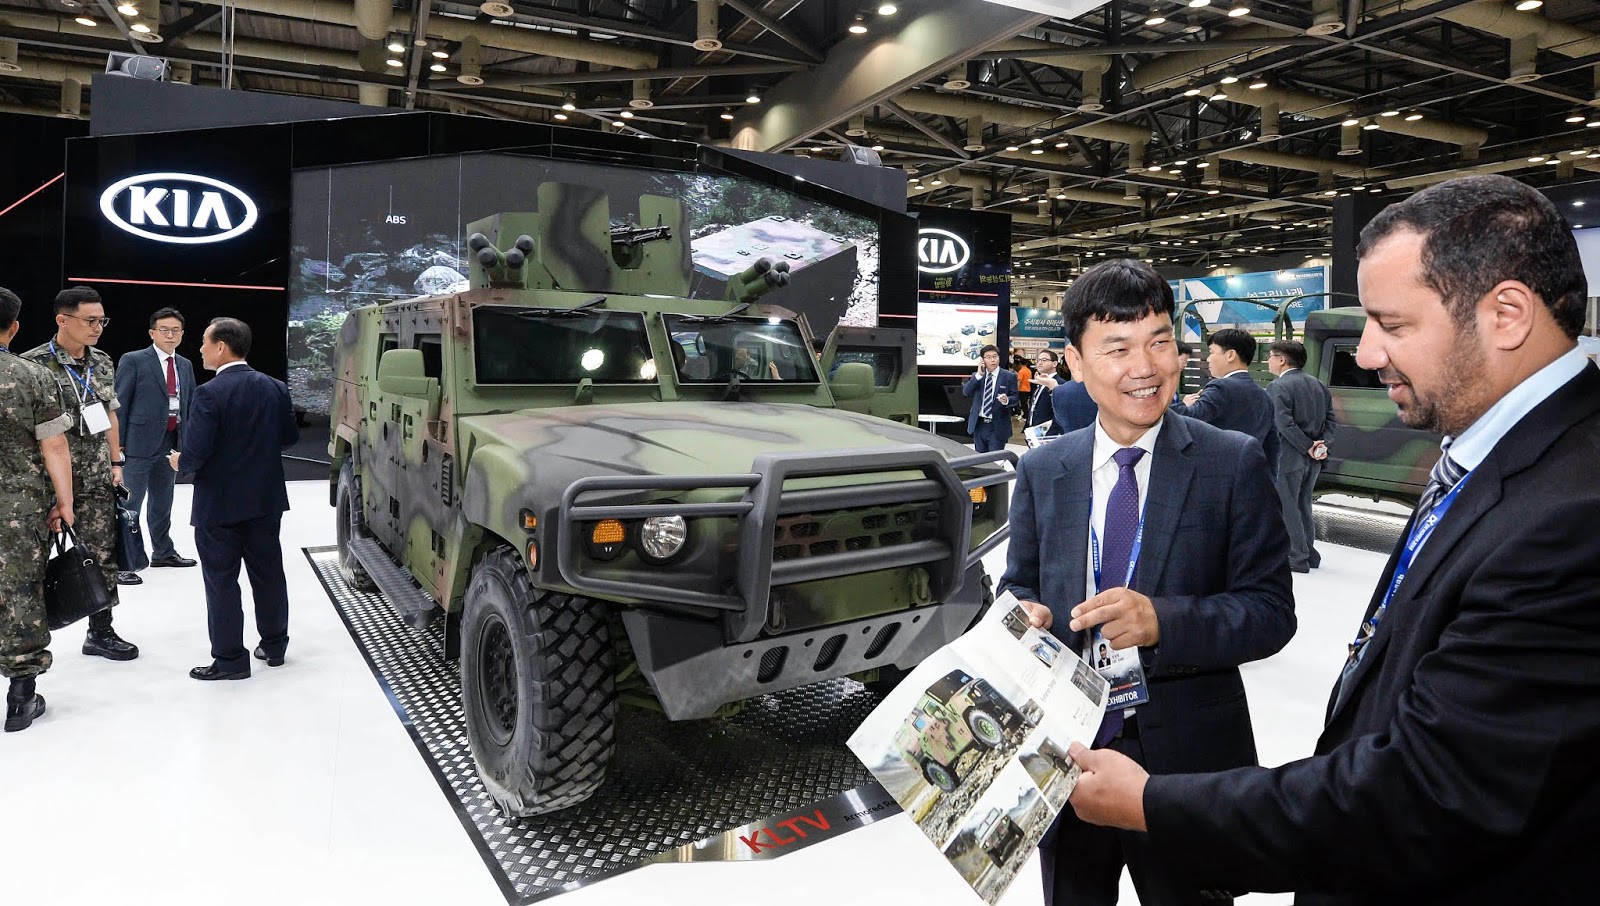 Kia displays new tactical vehicles at DX Korea 2018